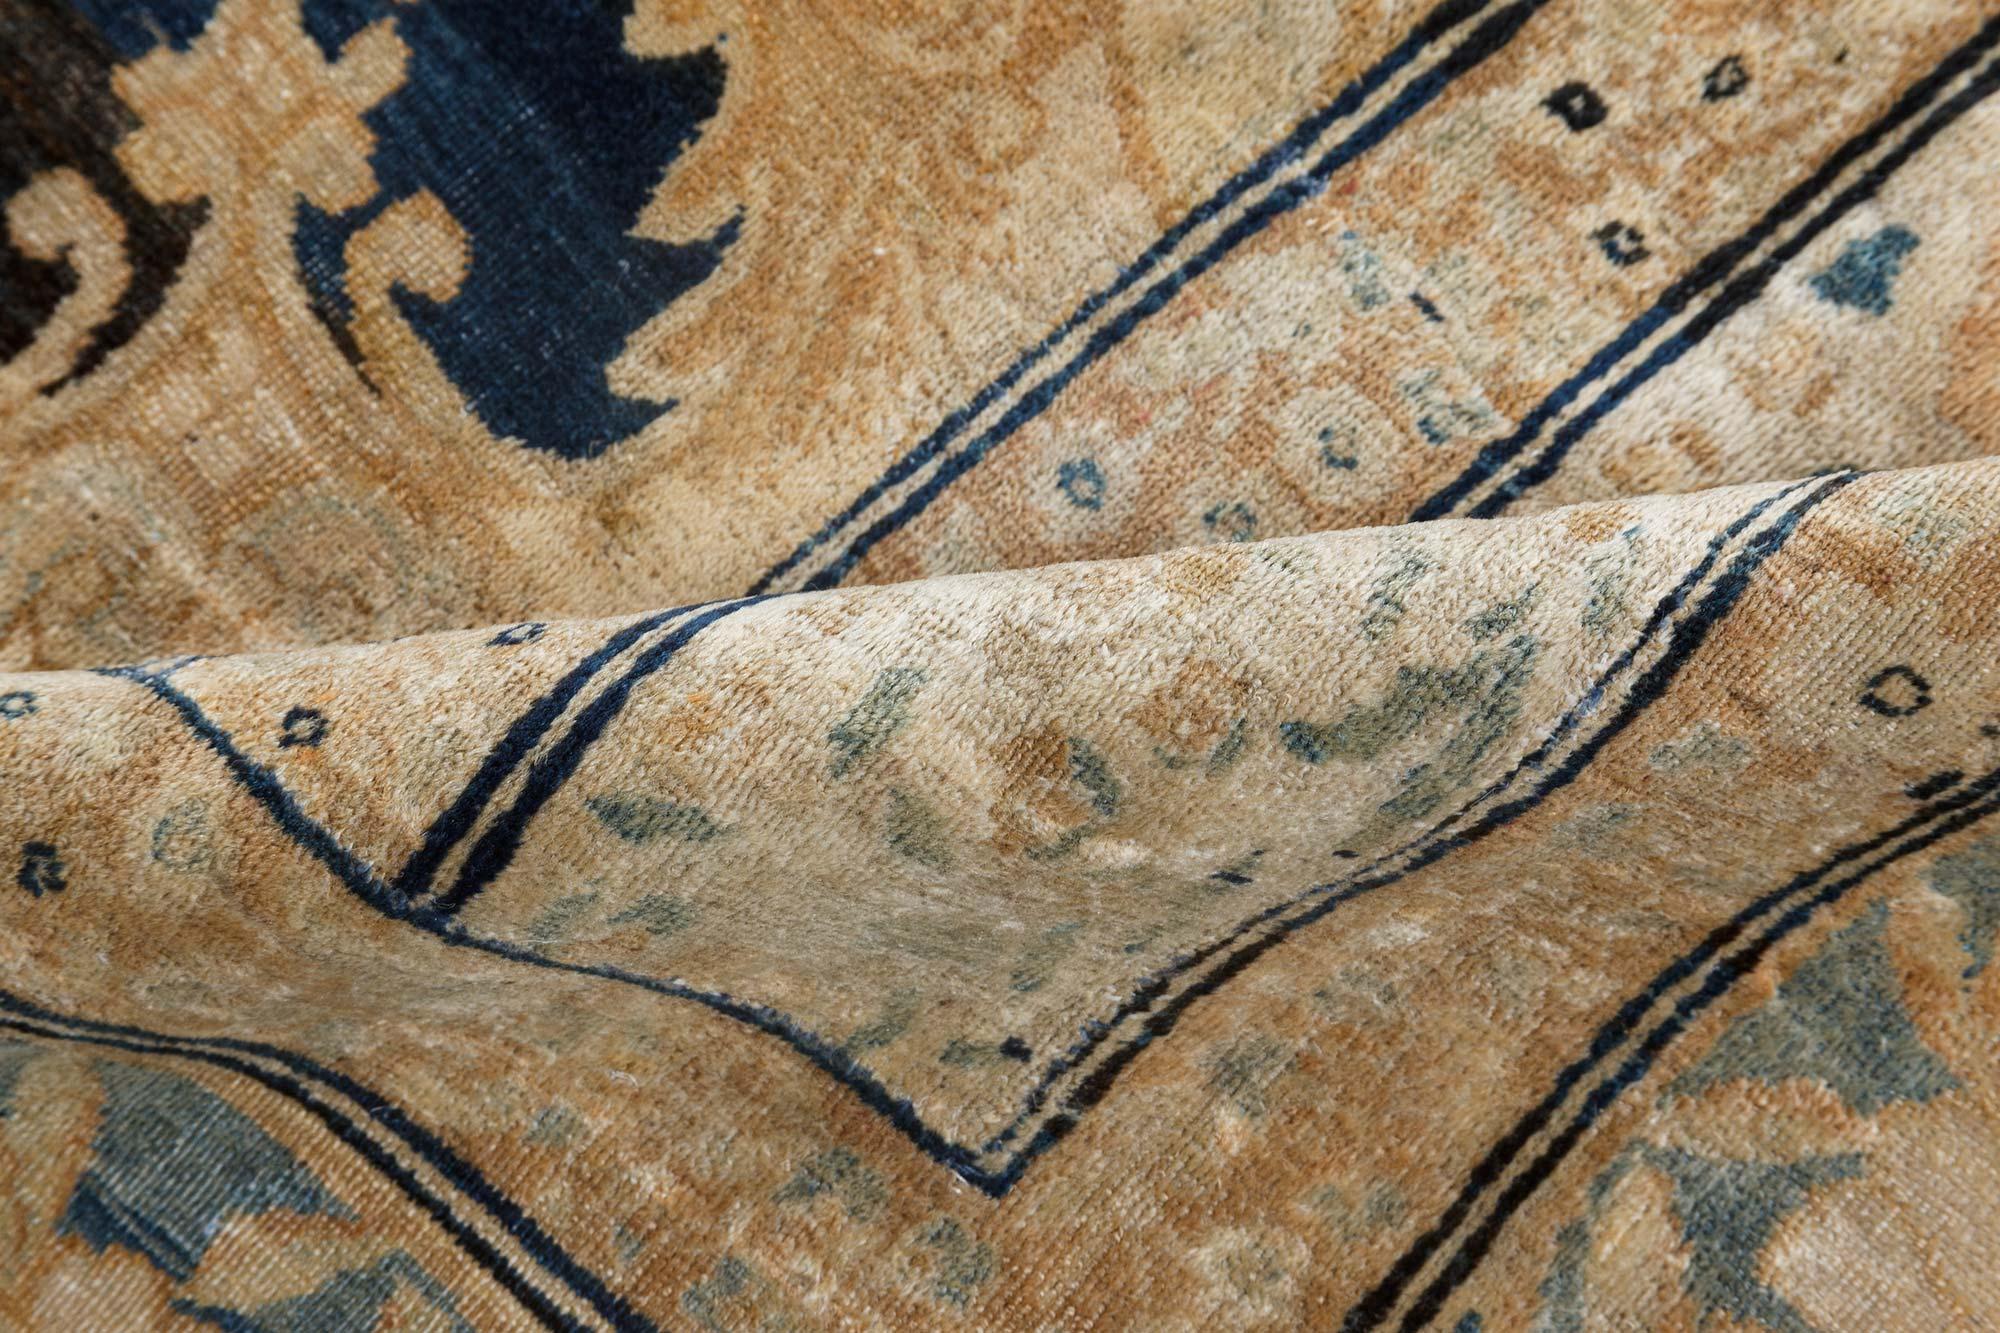 Authentic 19th century Persian Kirman carpet
Size: 12'0